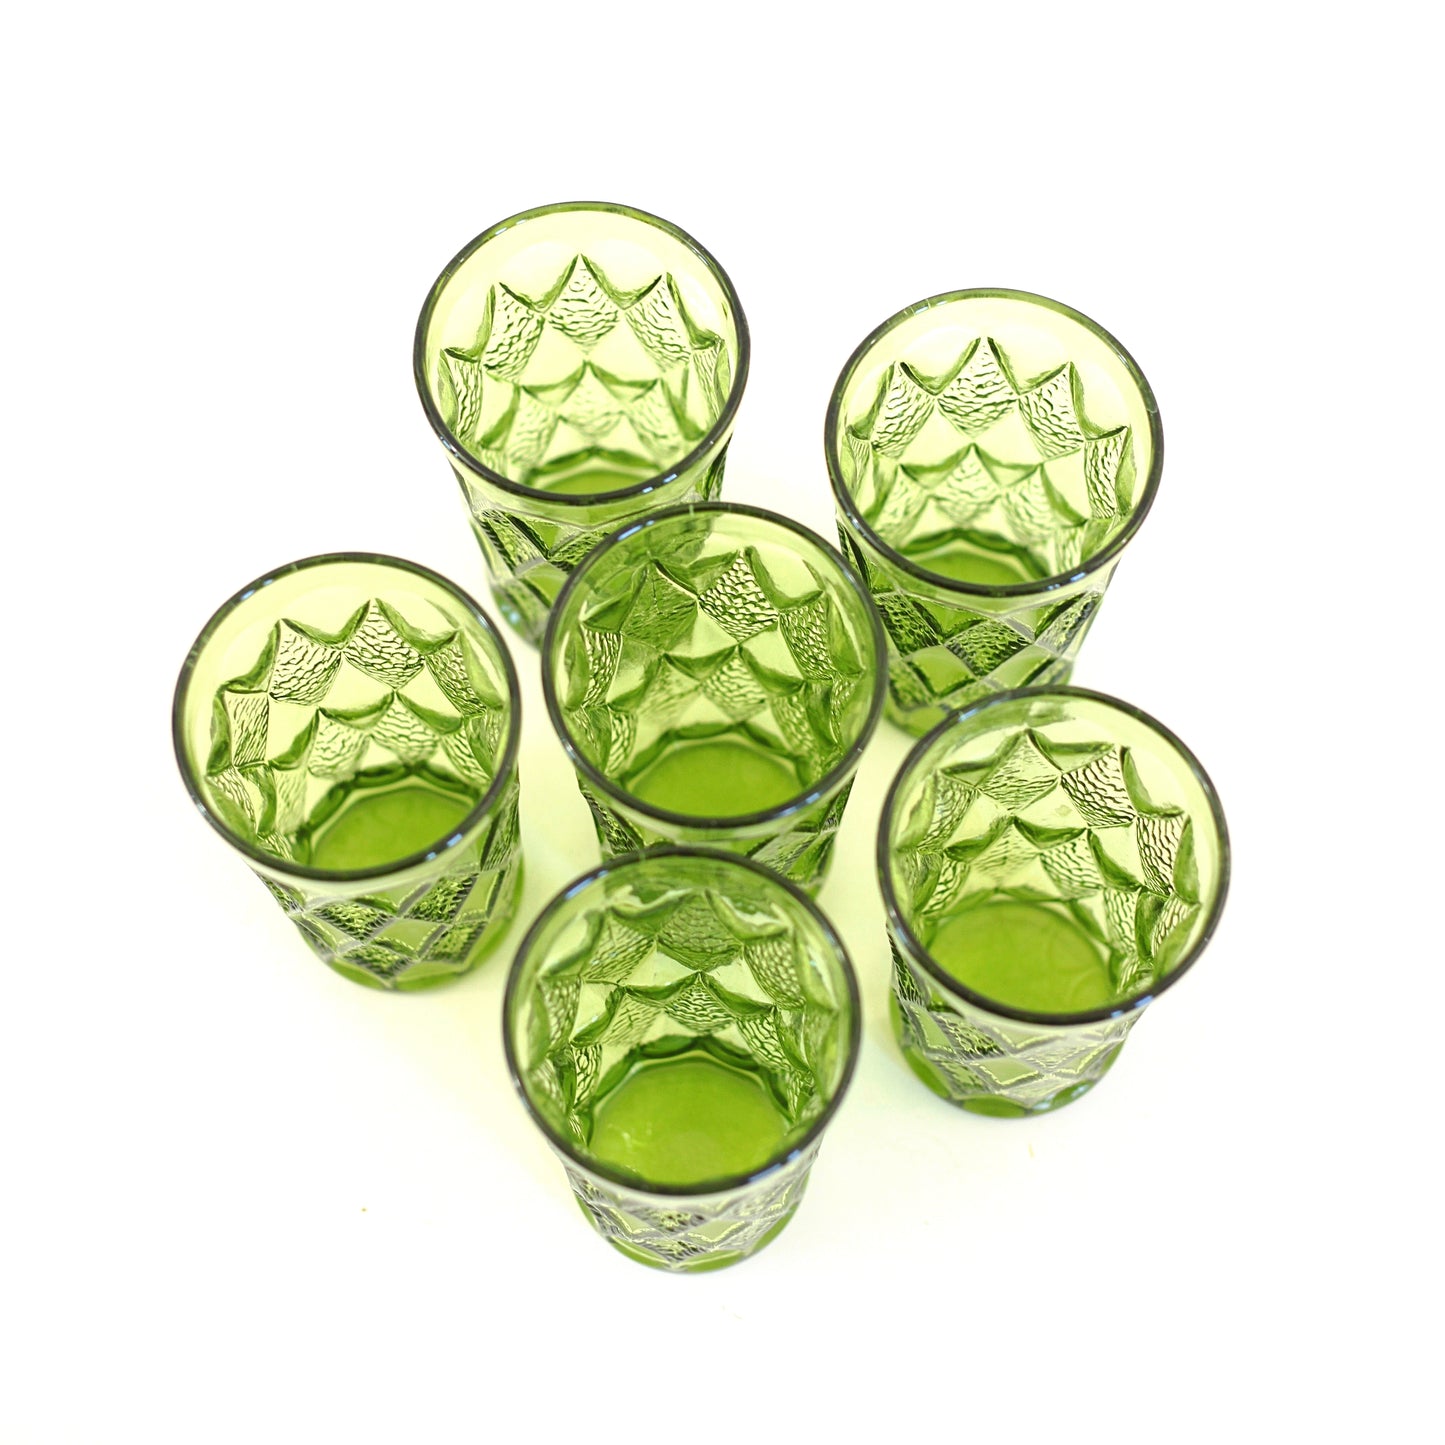 SOLD - Mid Century Avocado Green Gemstone Kimberly Glasses by Anchor Hocking